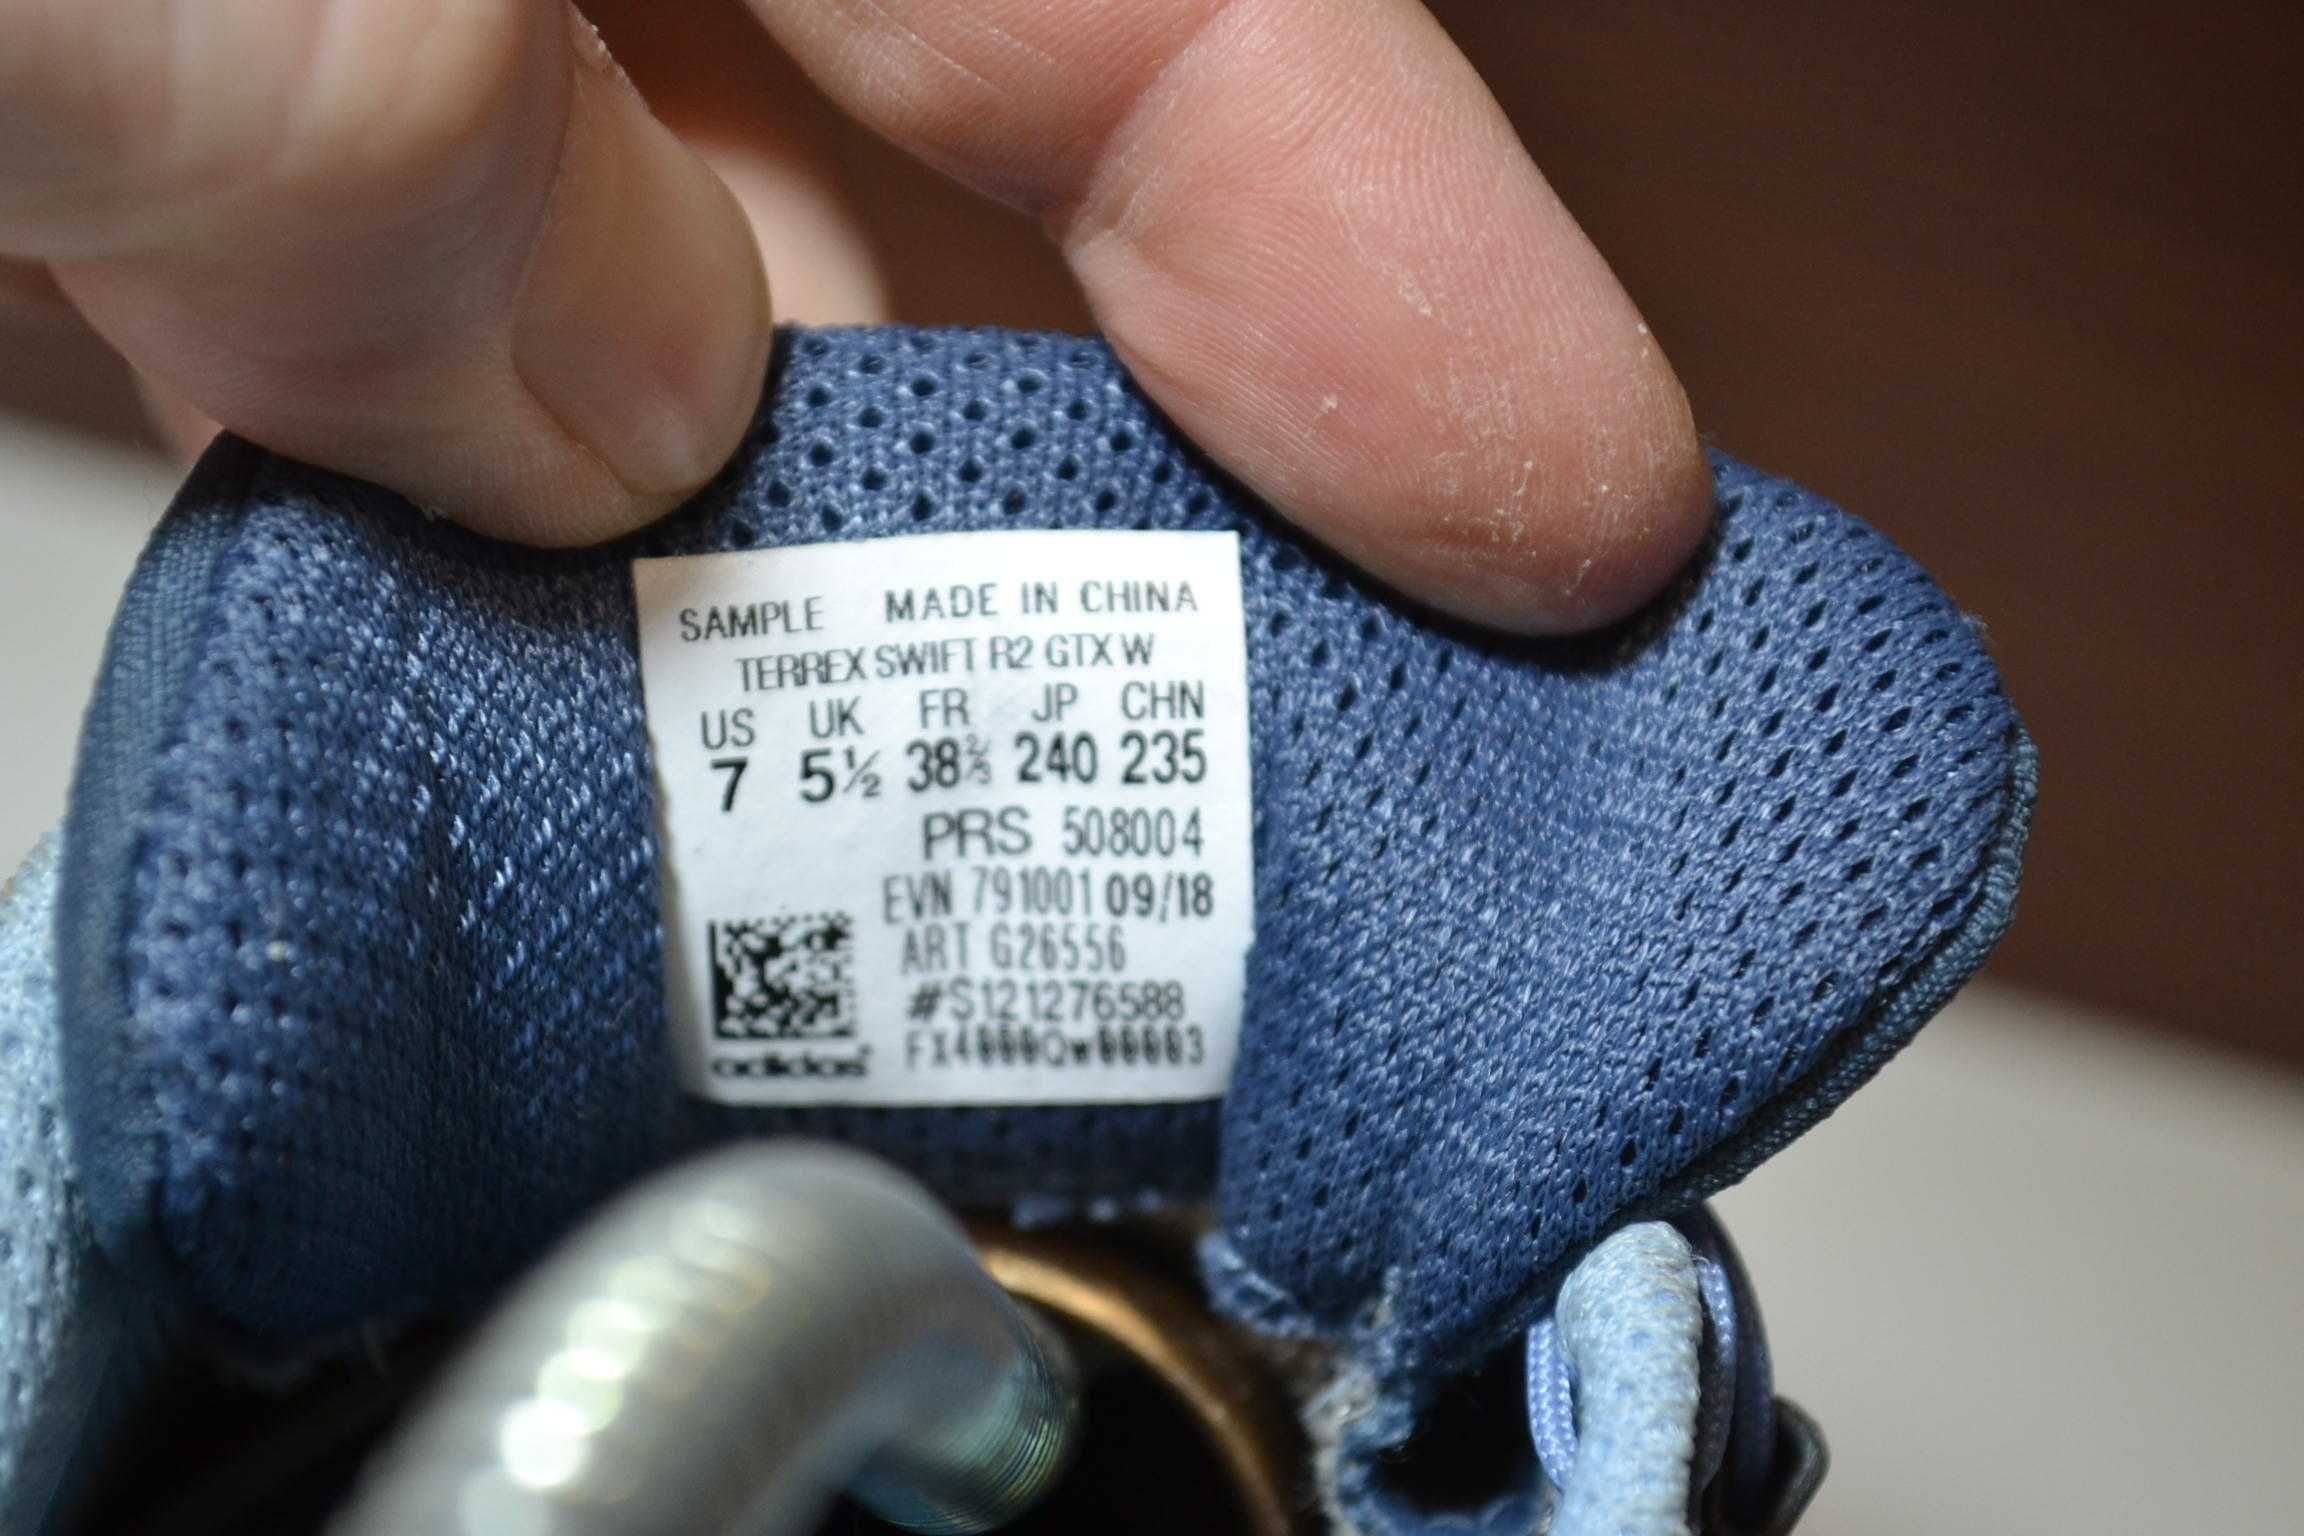 adidas terrex swift r2 кроссовки 38.5р ботинки трекинговые для хайкинг